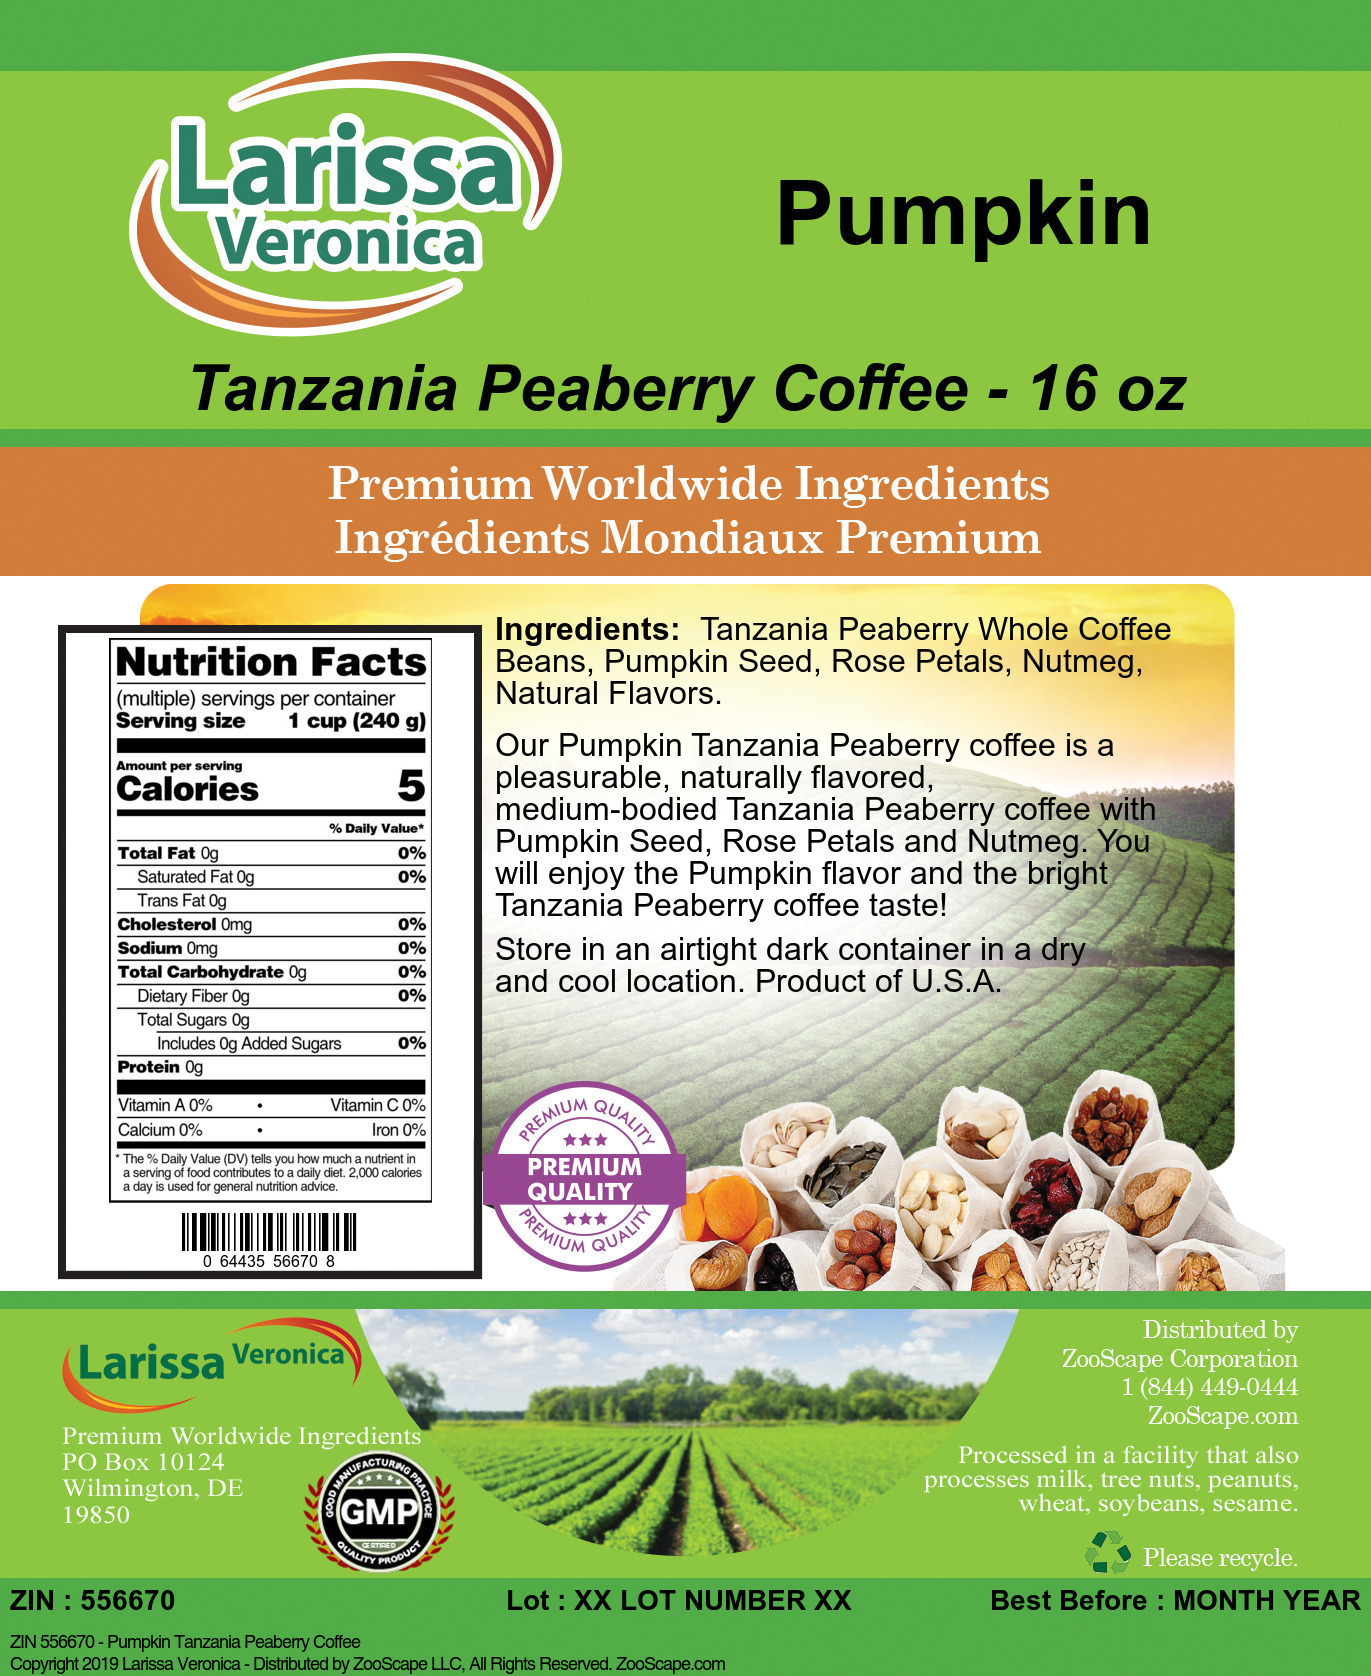 Pumpkin Tanzania Peaberry Coffee - Label